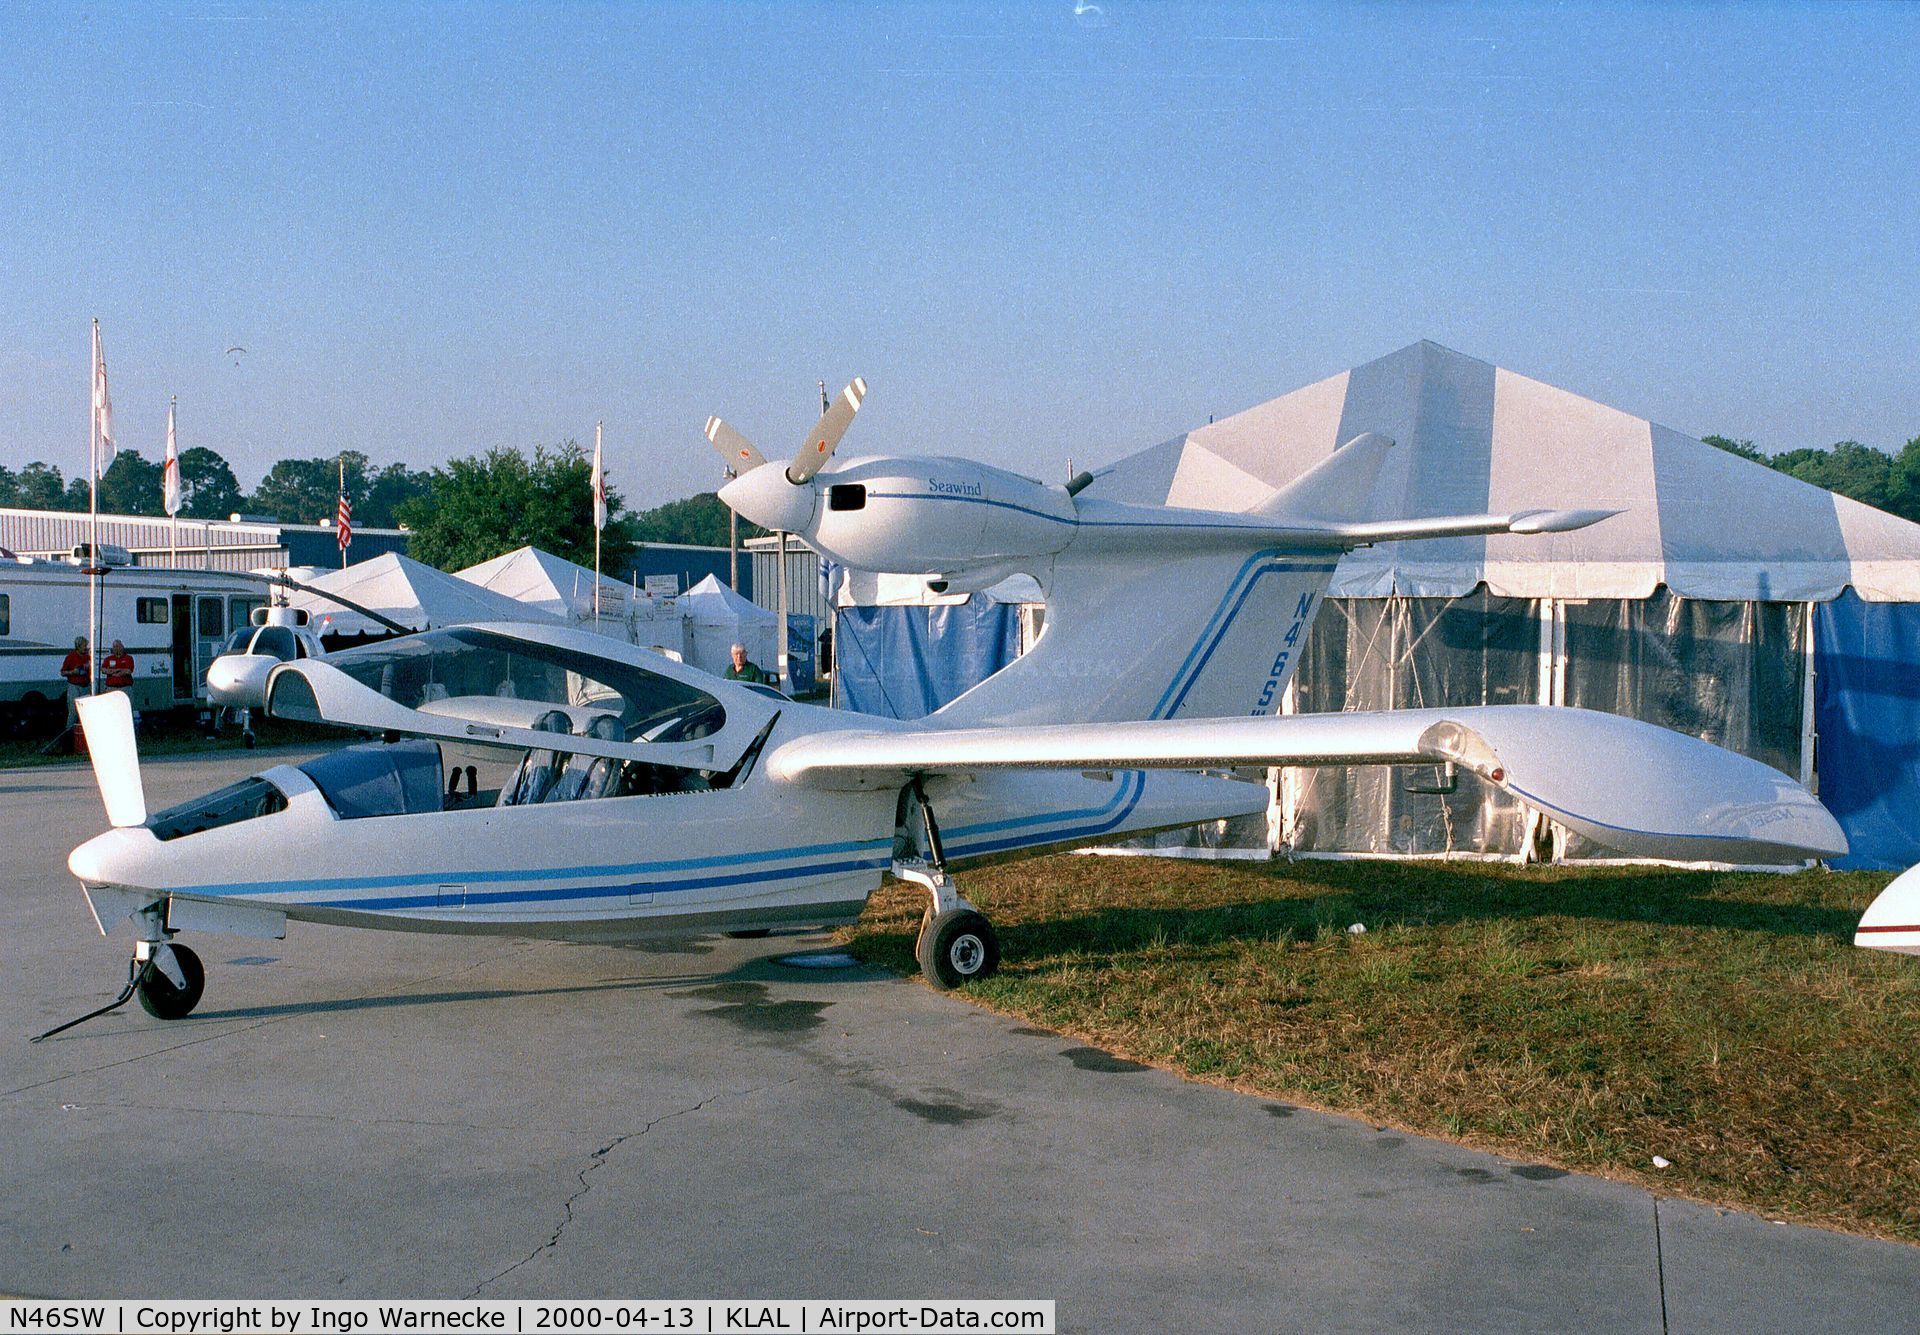 N46SW, 1993 Seawind Seawind C/N 003, Seawind (Silva) at 2000 Sun 'n Fun, Lakeland FL